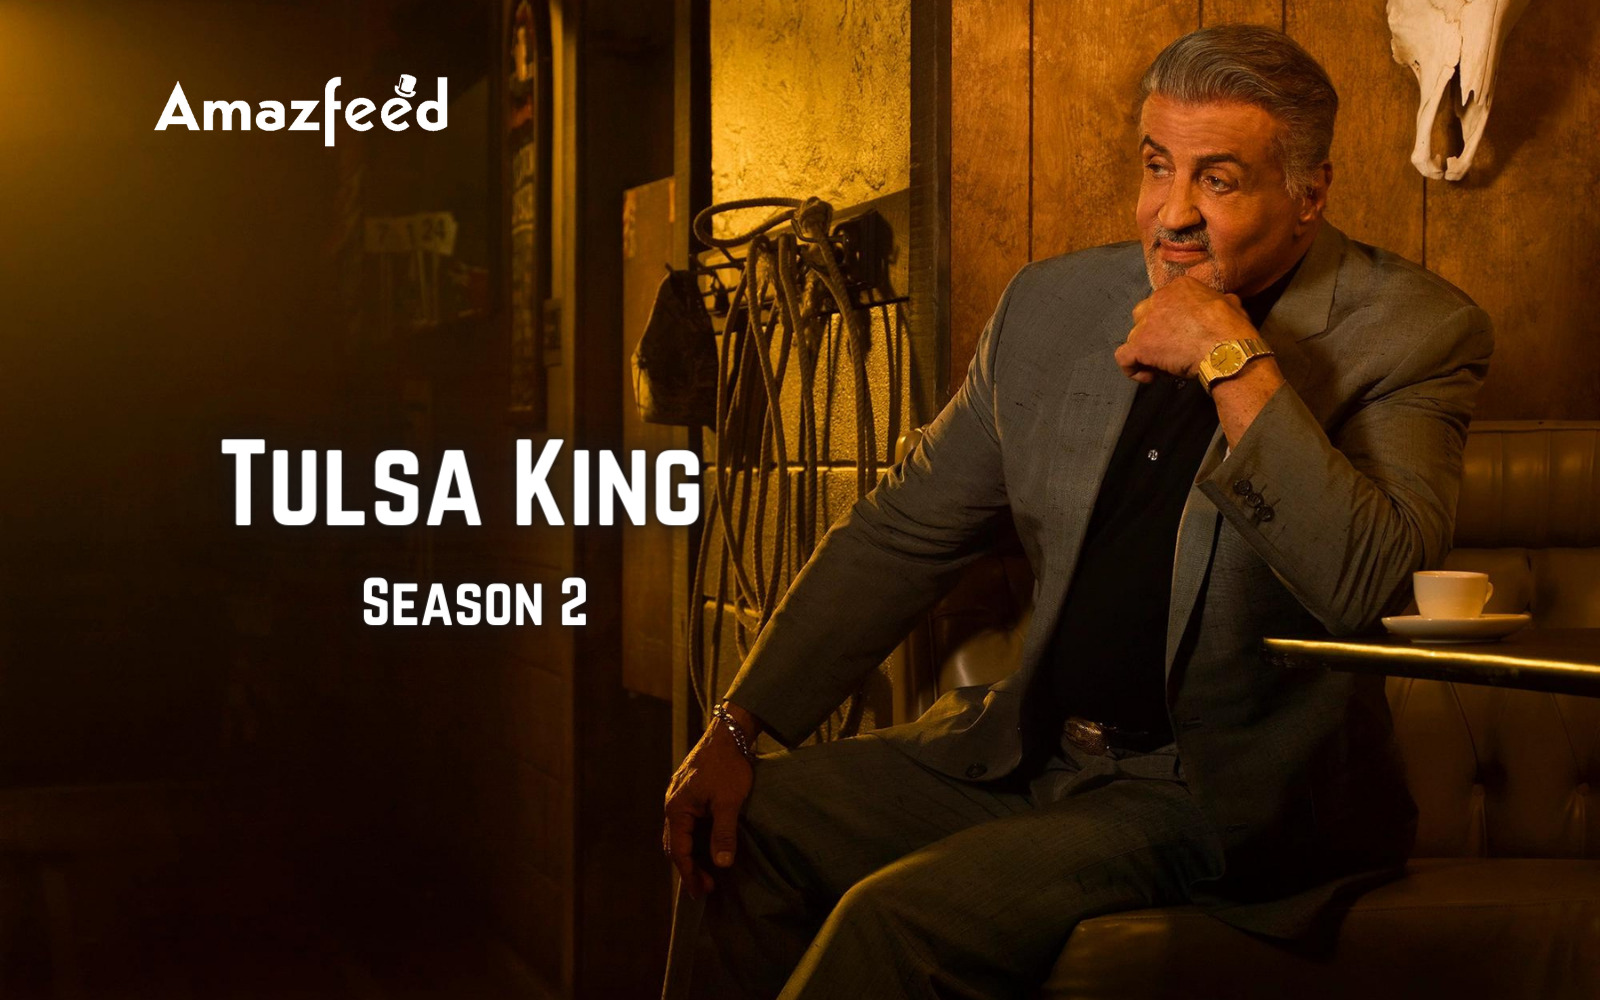 Tulsa King Season 2.1